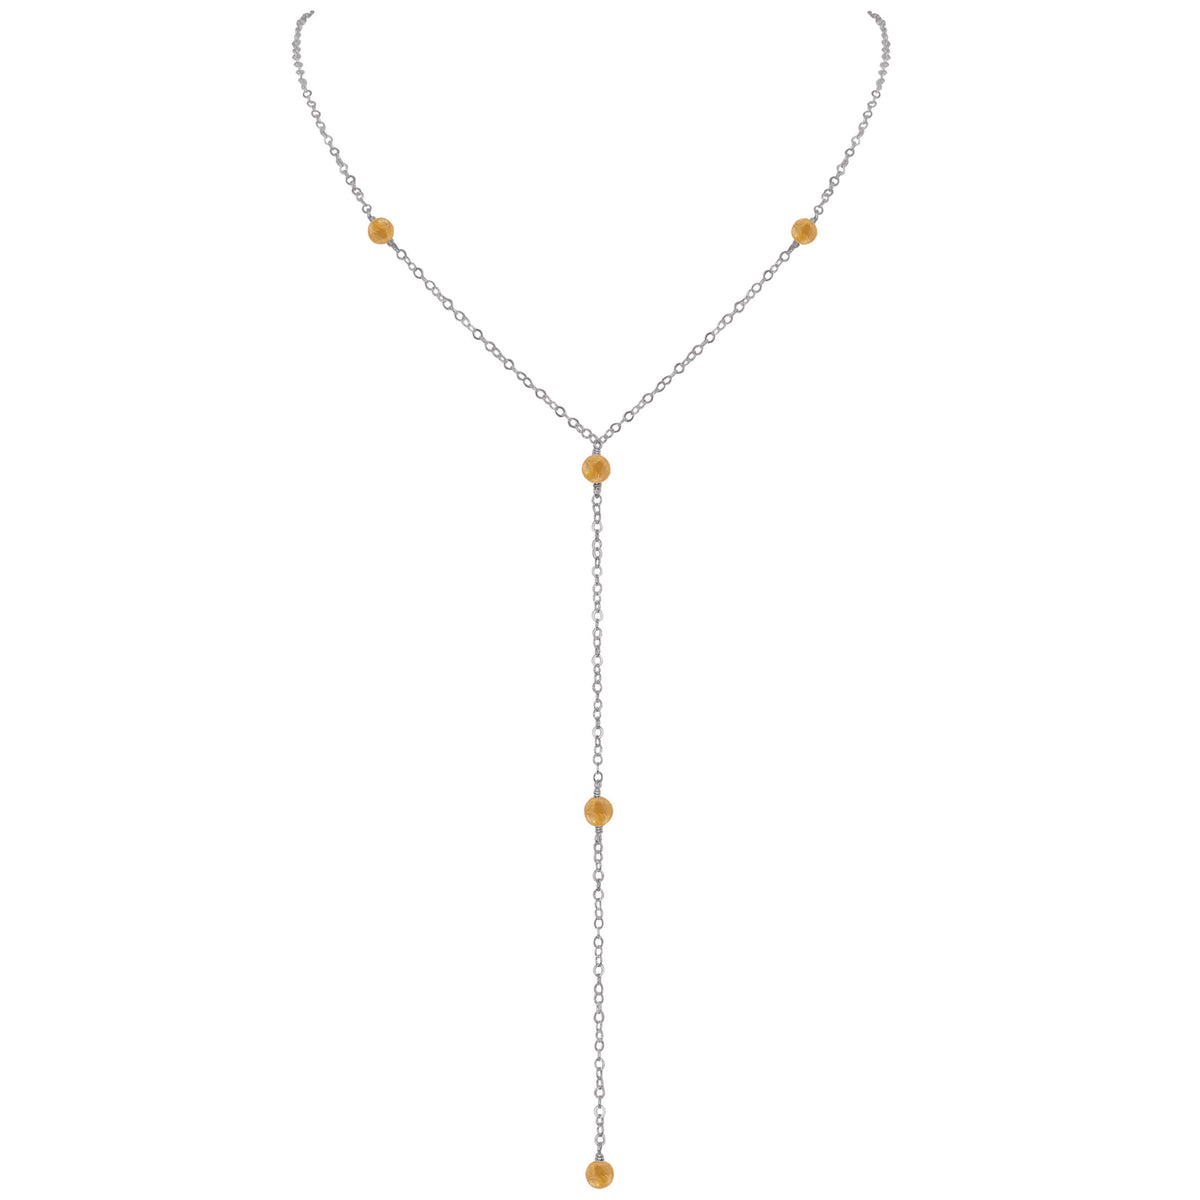 Dainty Y Necklace - Citrine - Stainless Steel - Luna Tide Handmade Jewellery